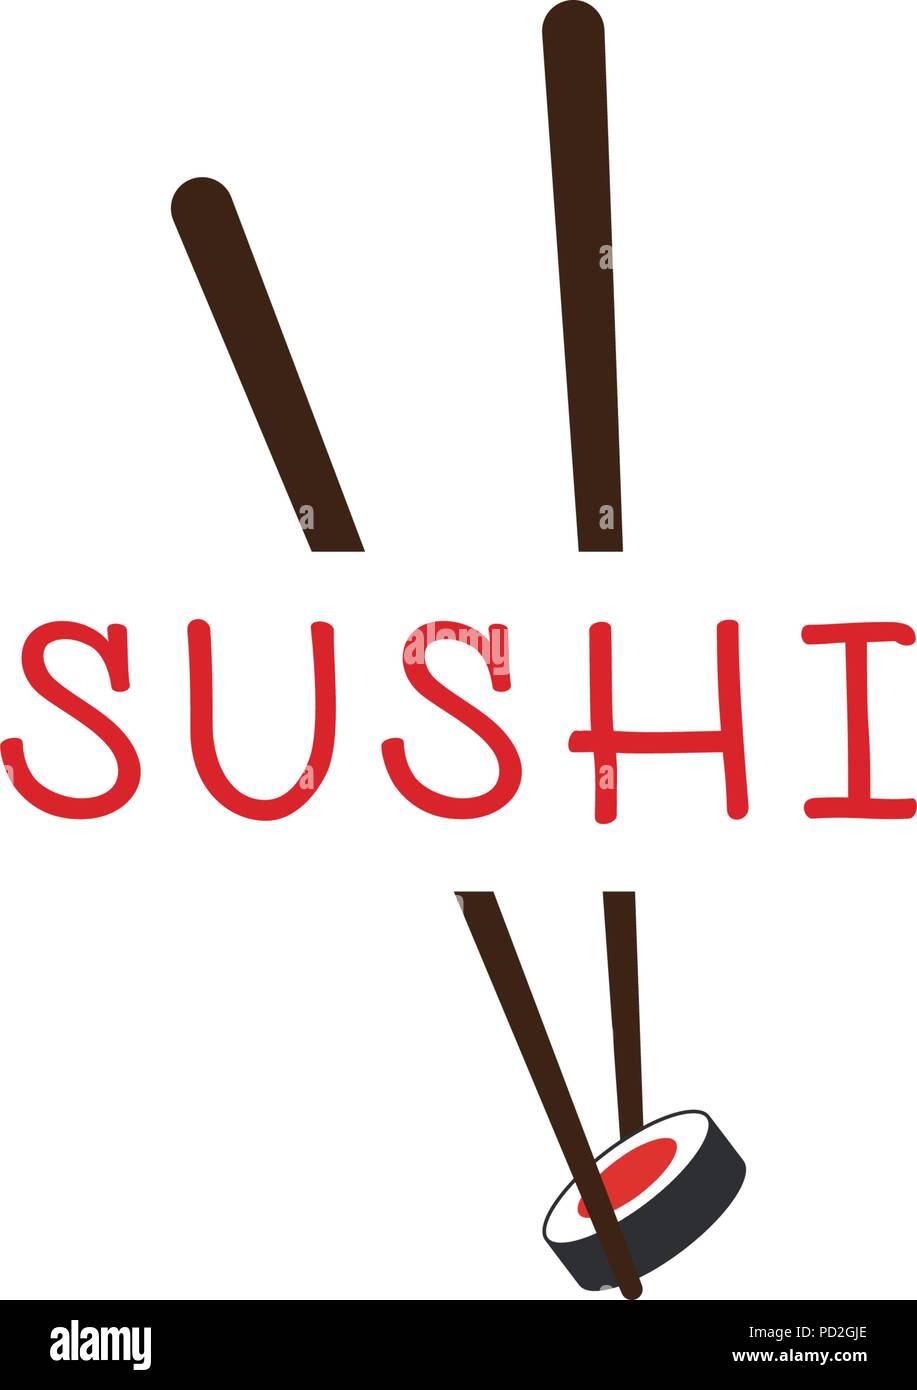 Illustration of sushi logo icon template design Stock Vector